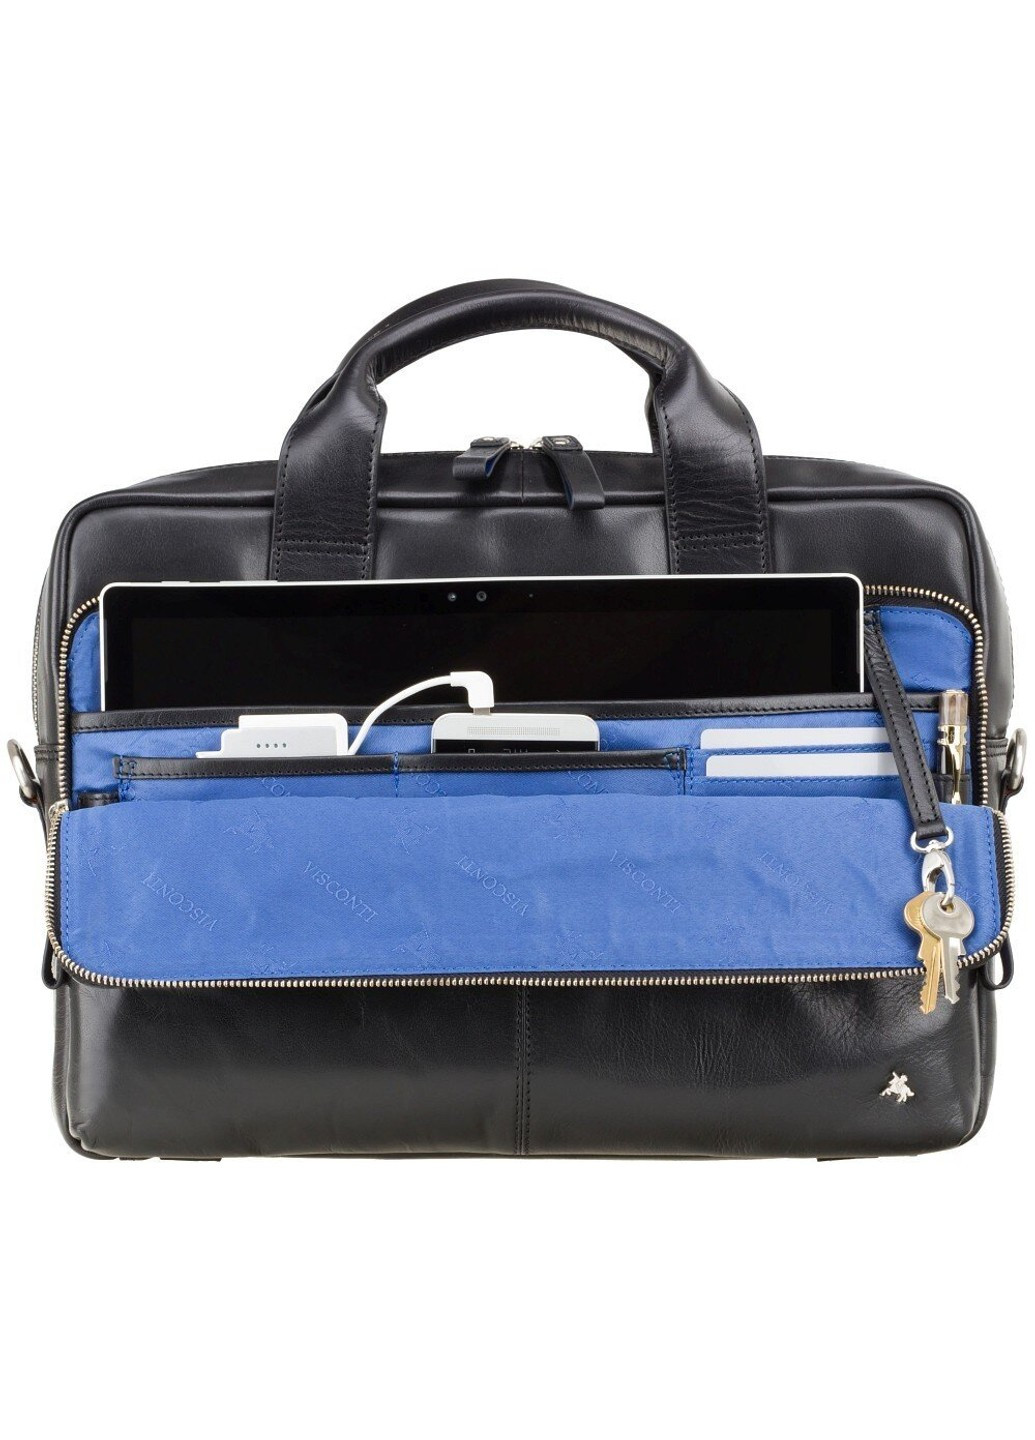 Мужская кожаная сумка с RFID защитой ml31 brn Visconti (262086627)